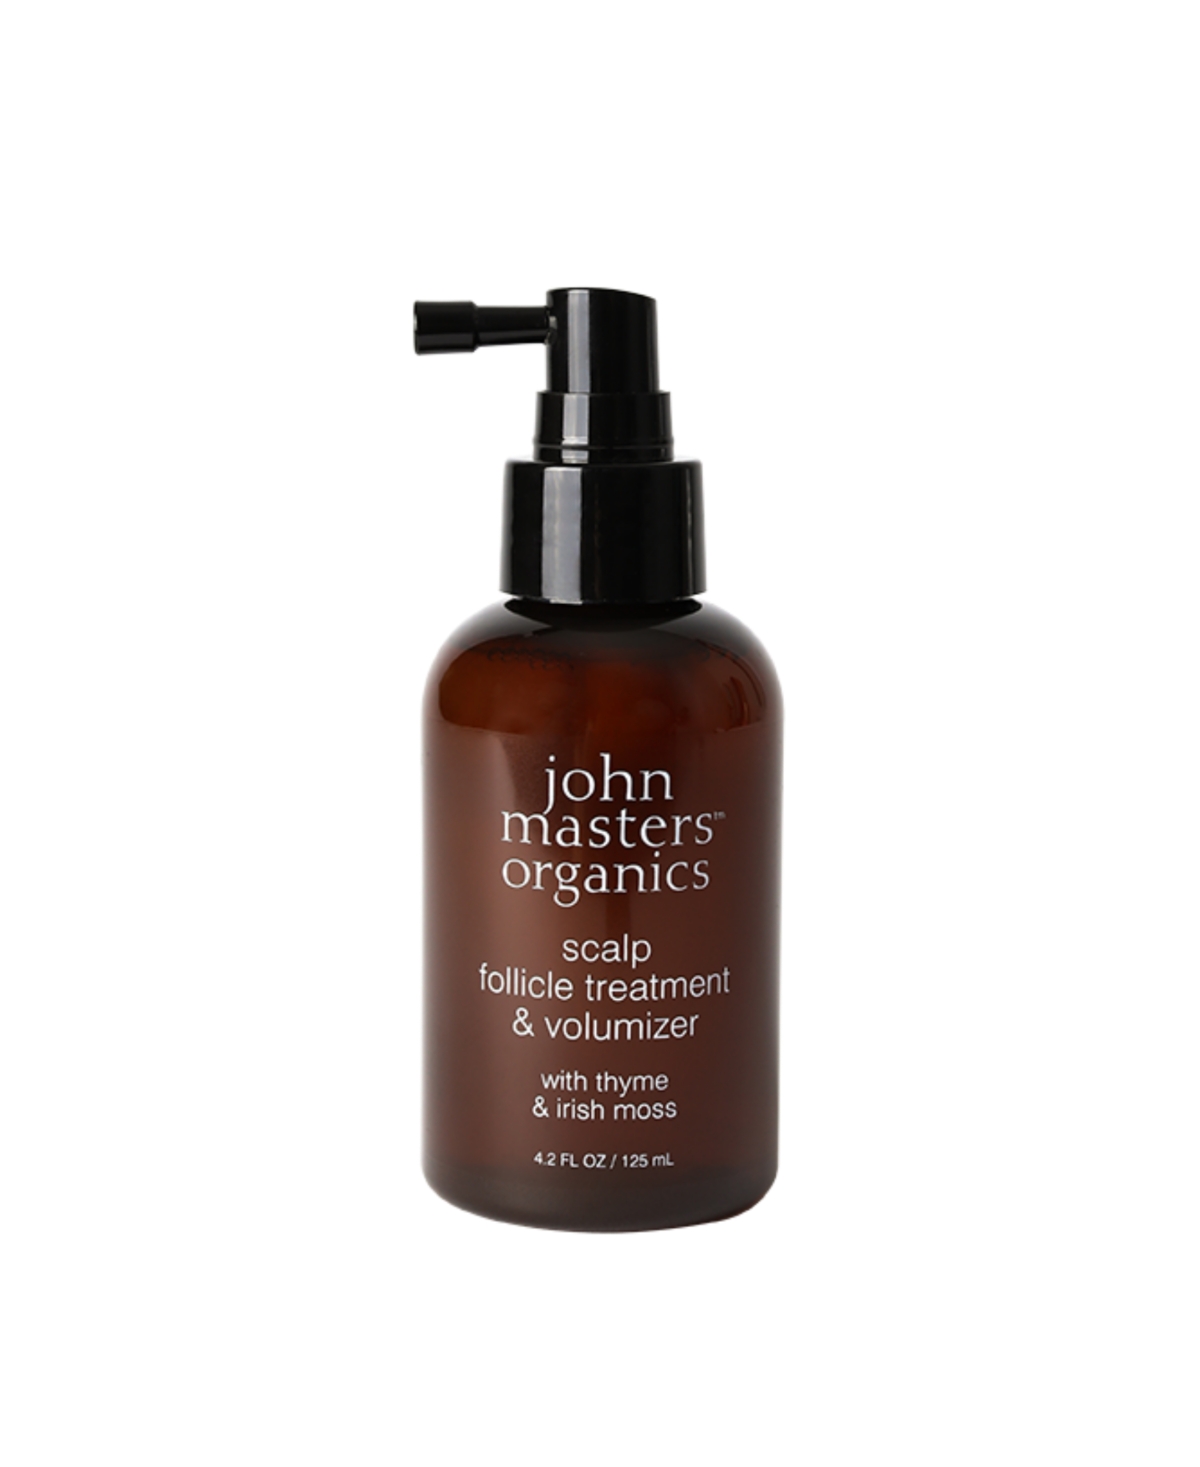 John Masters Organics Scalp Follicle Treatment And Volumizer With Thyme And Irish Moss, 4.2 Fl oz